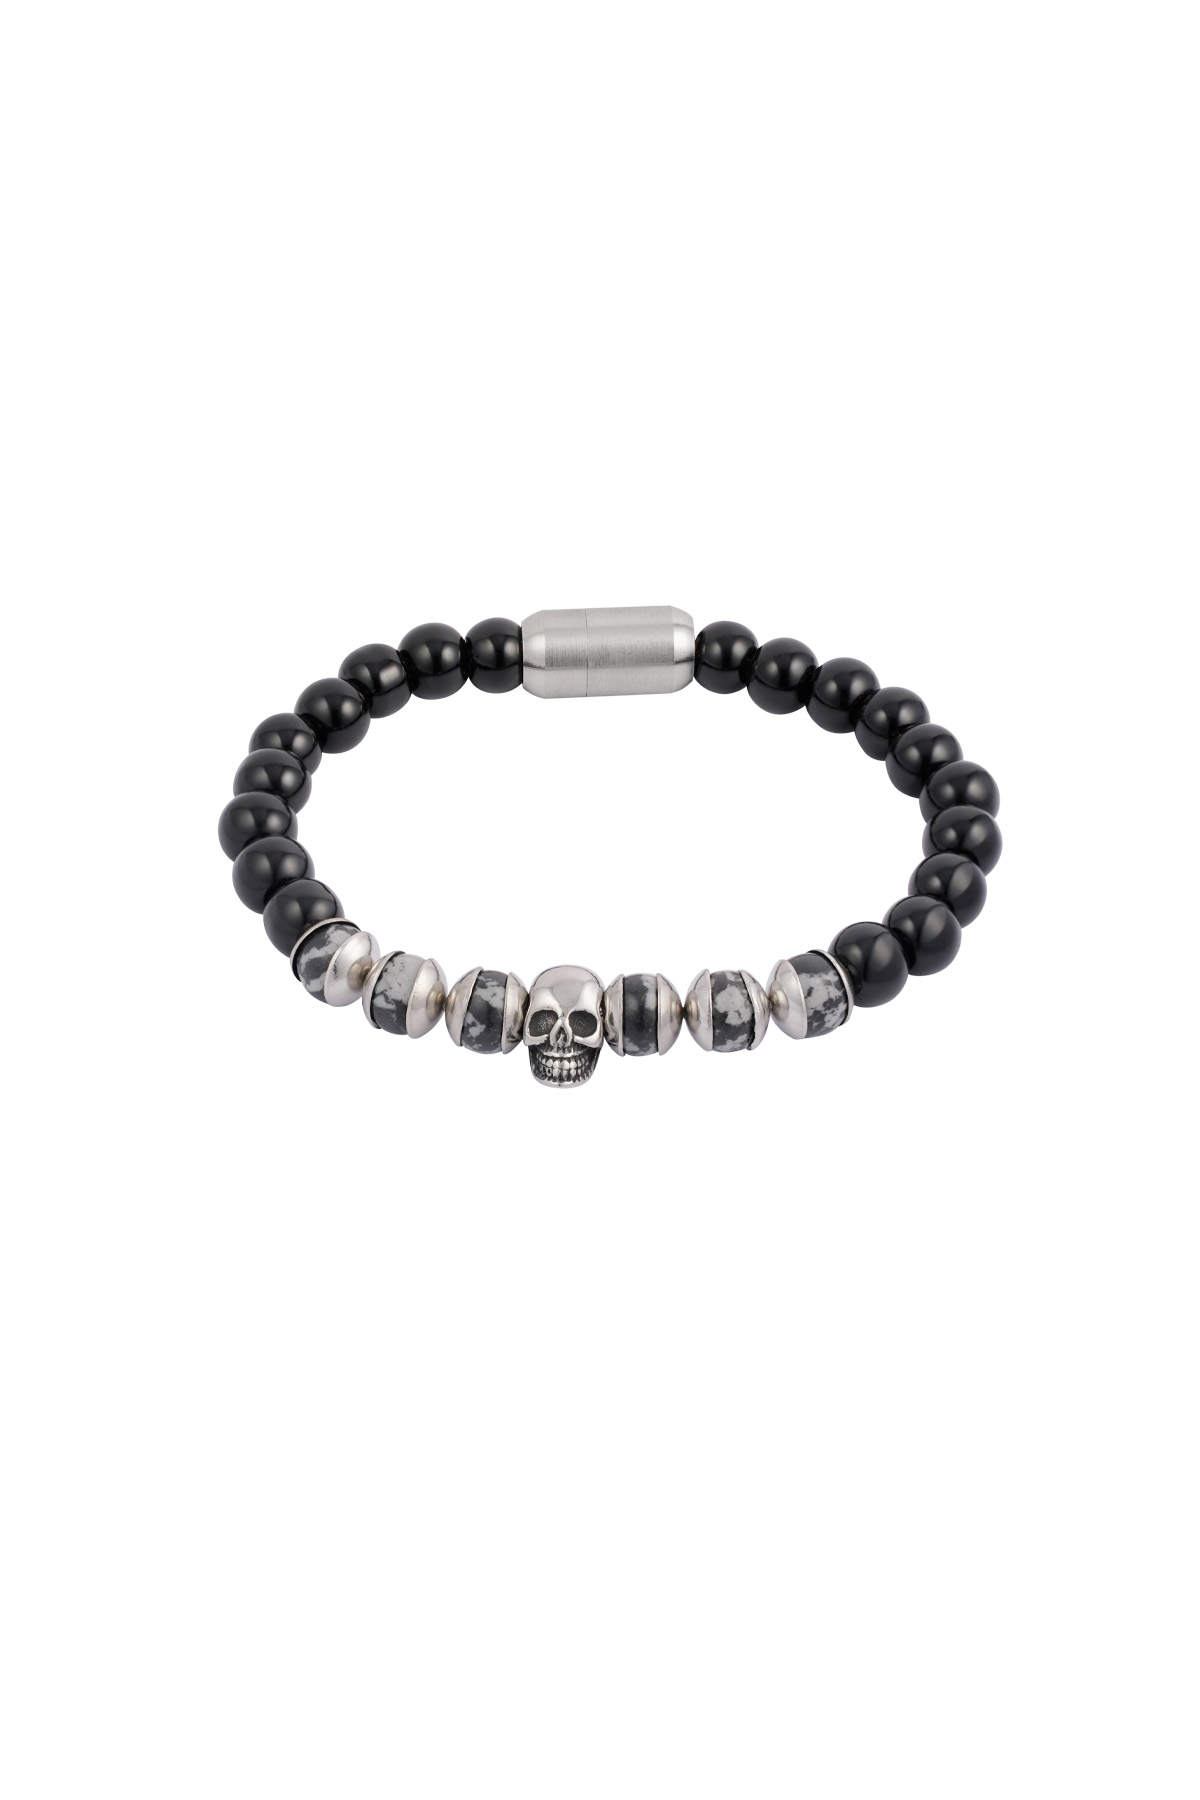 Bracelet with beads and skull - black  h5 